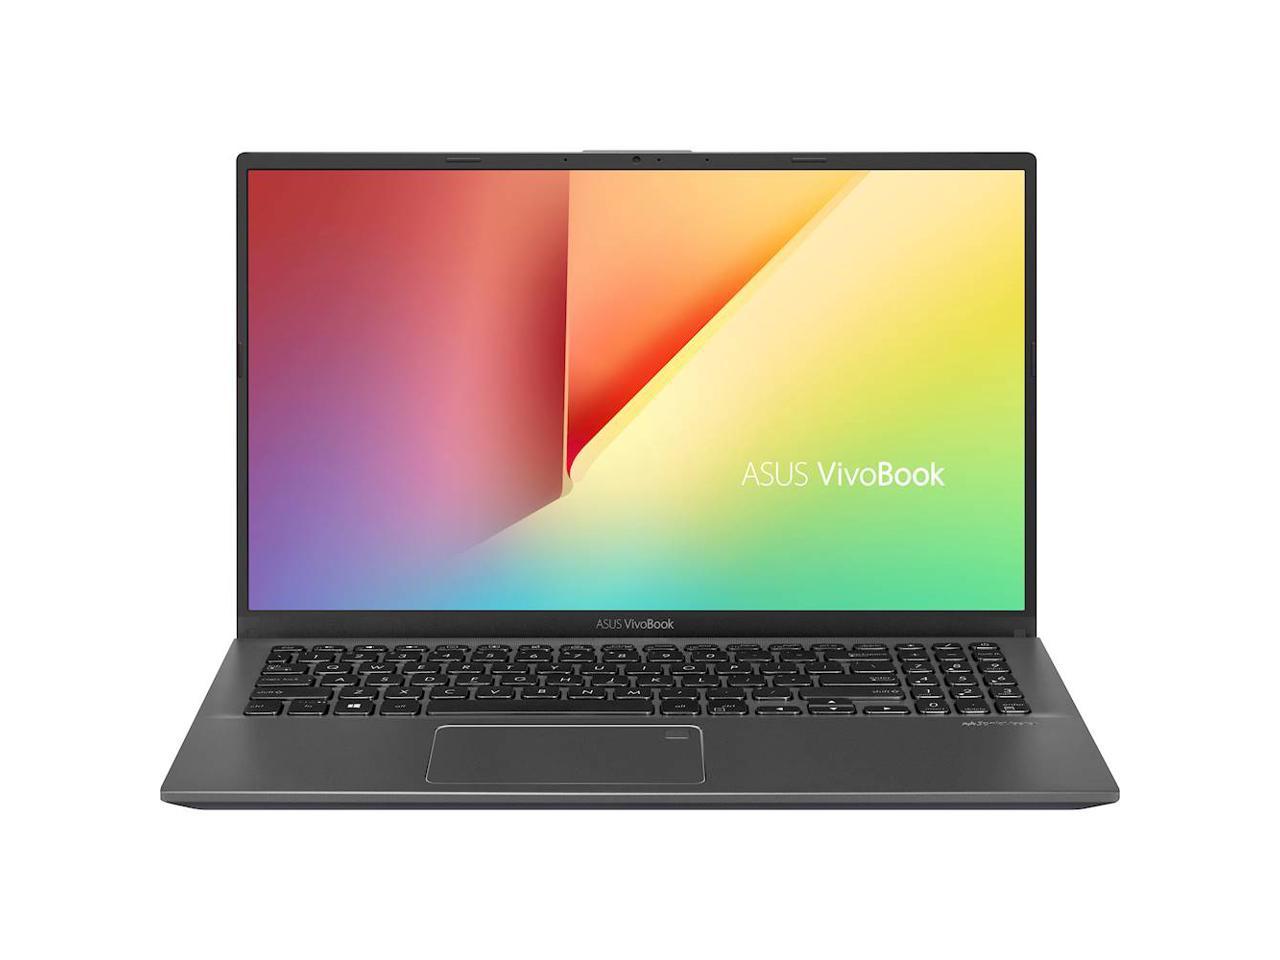 ASUS VivoBook F512DA-RS36 15.6" FHD Laptop, AMD Ryzen 3 3200U Dual-Core 2.6GHz, 8GB RAM, 256GB SSD, Radeon Vega 3, Windows 10 - Slate Gray